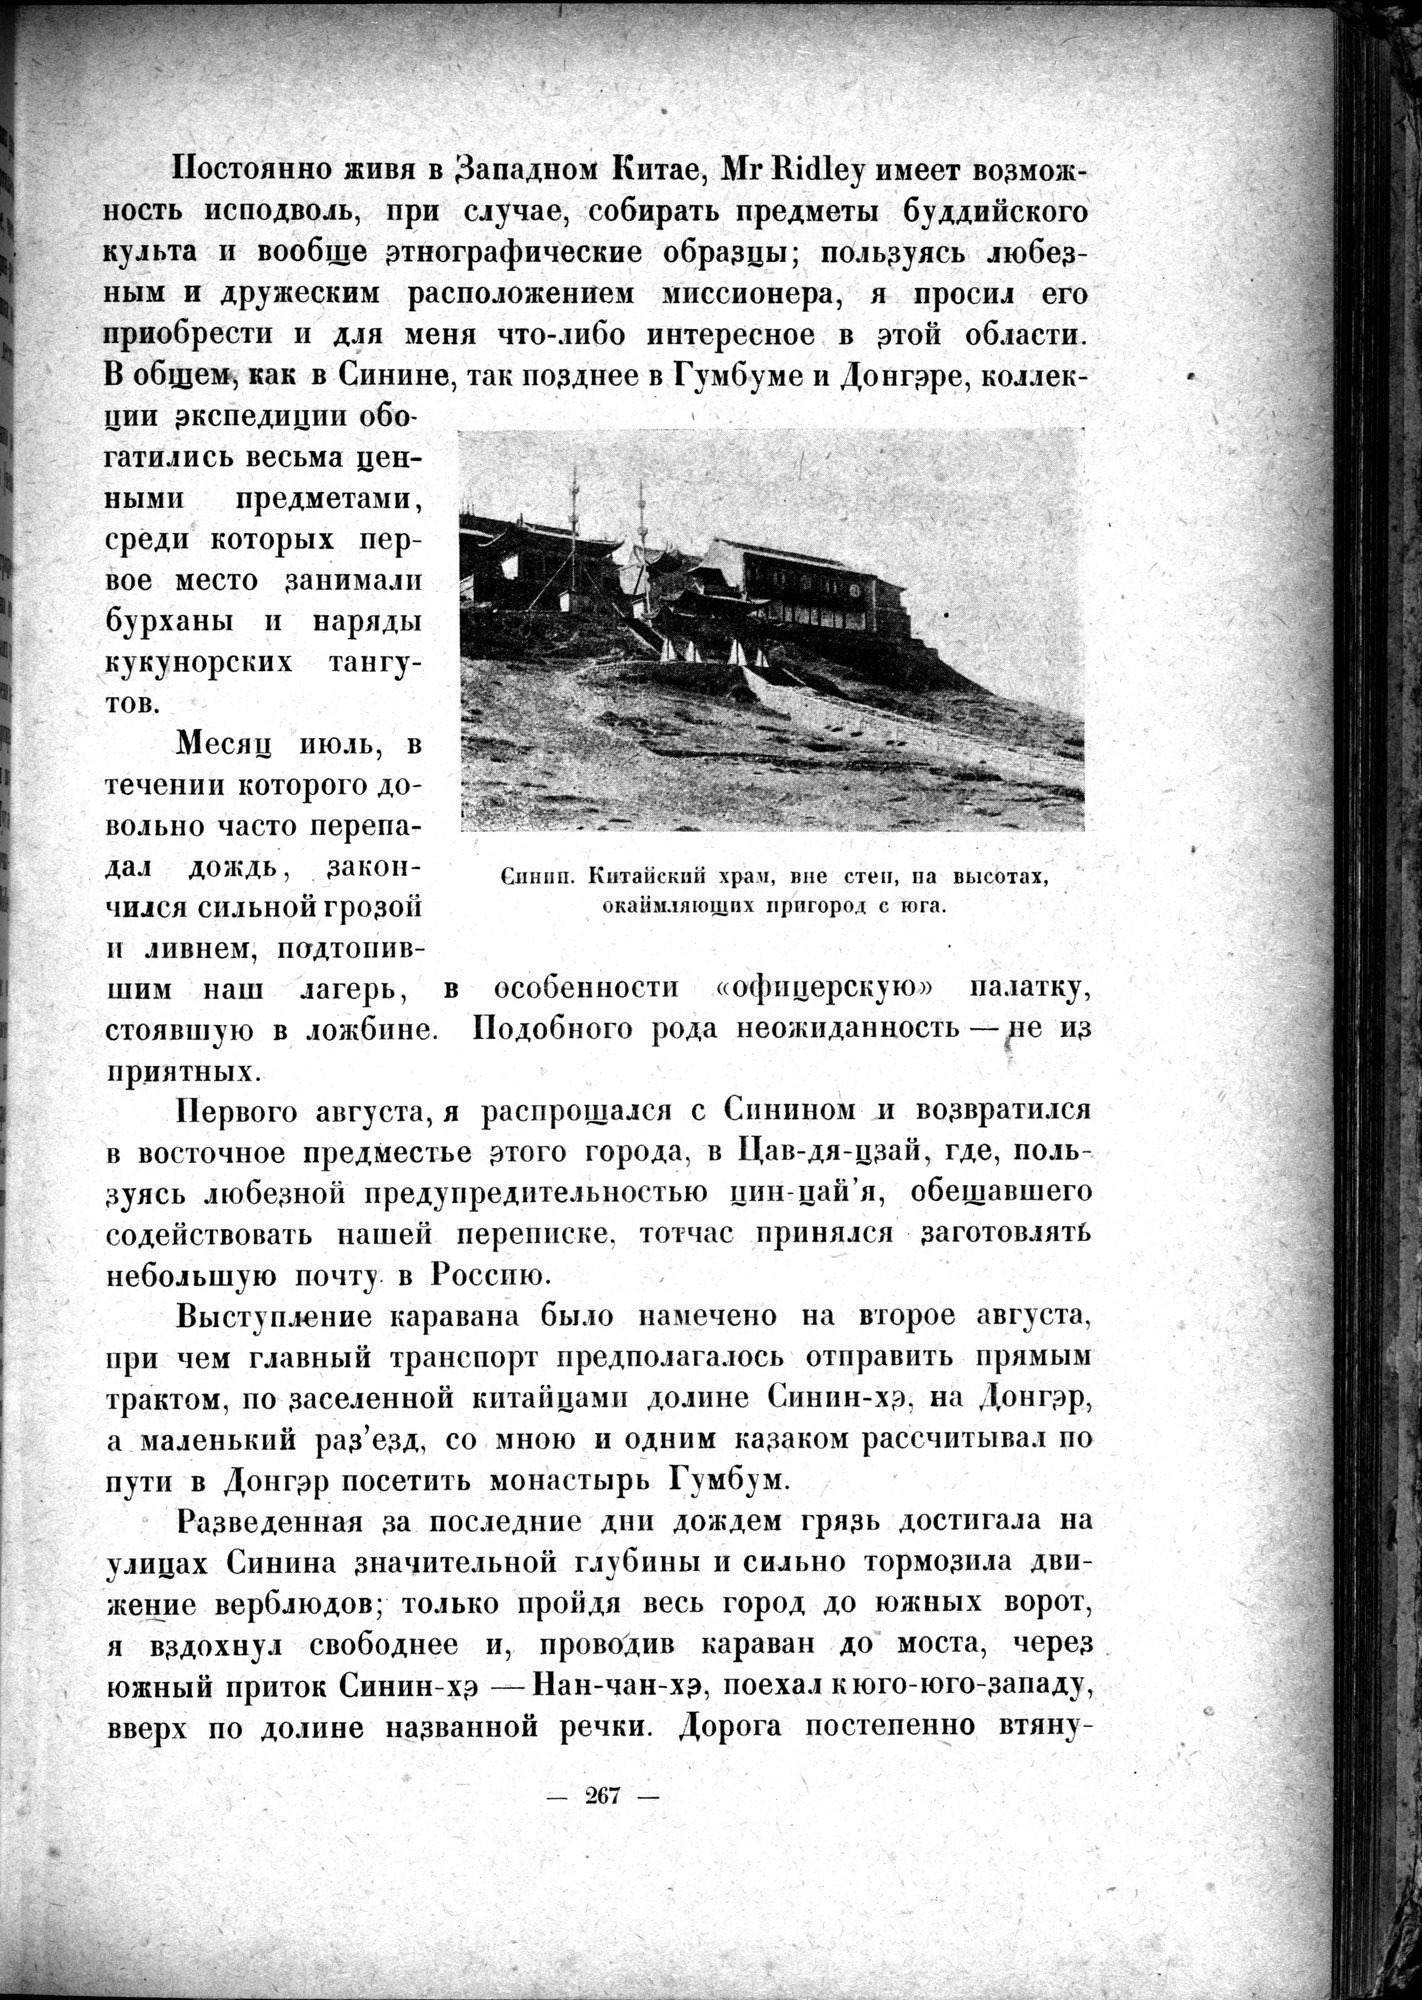 Mongoliya i Amdo i mertby gorod Khara-Khoto : vol.1 / Page 317 (Grayscale High Resolution Image)